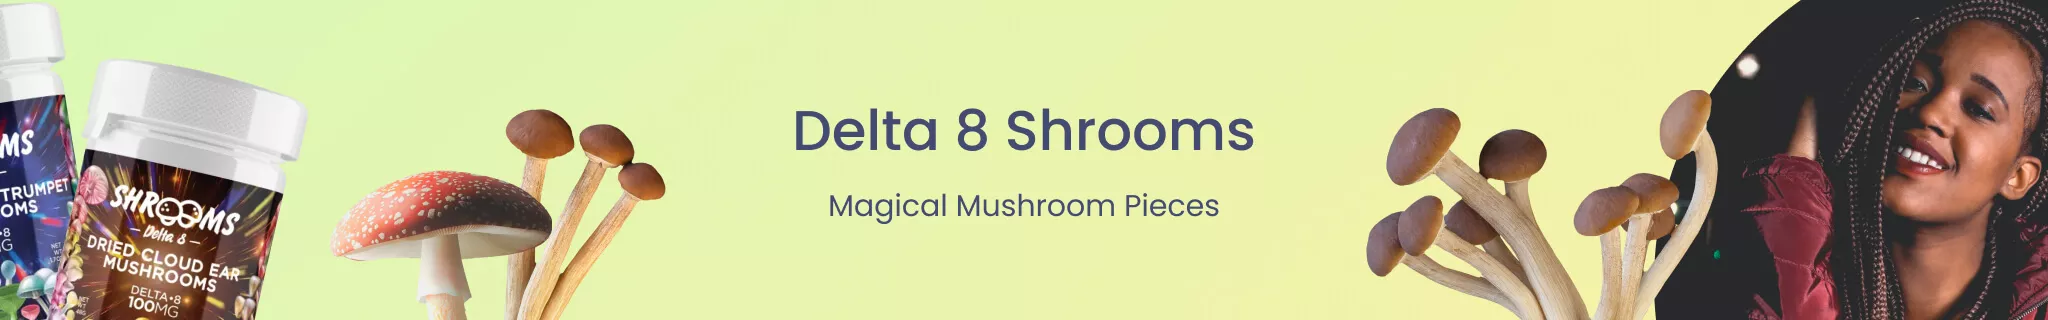 Delta 8 Shrooms